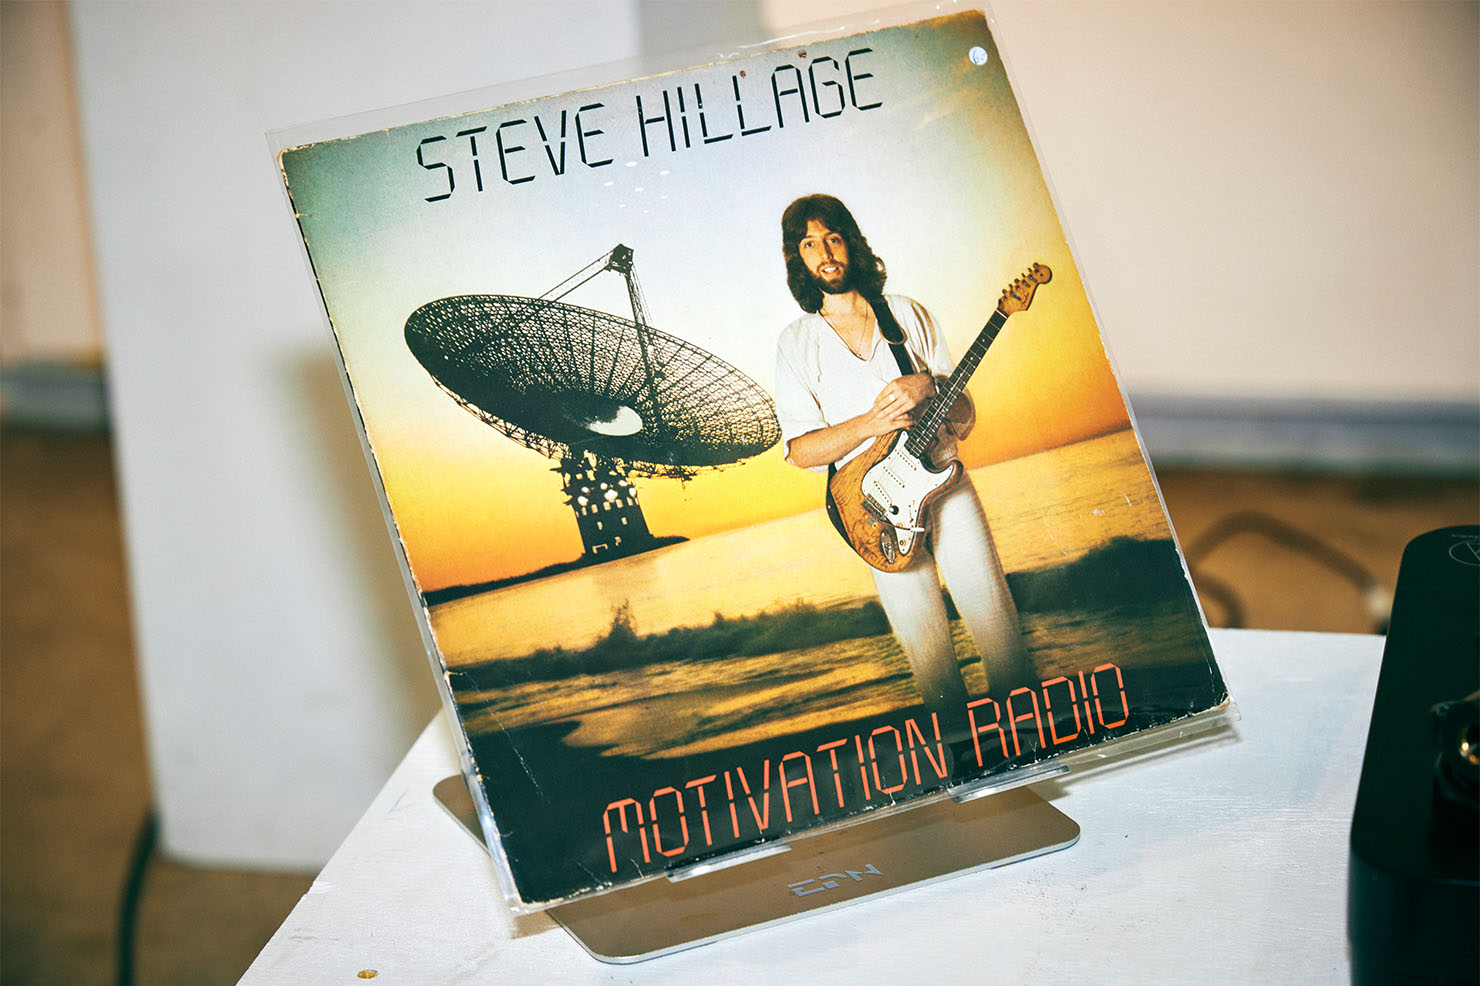 〜「VM750SH」 で視聴　Steve Hillage （スティーヴ・ヒレッジ） 『Motivation Radio』 収録曲 「Octave Doctors」〜